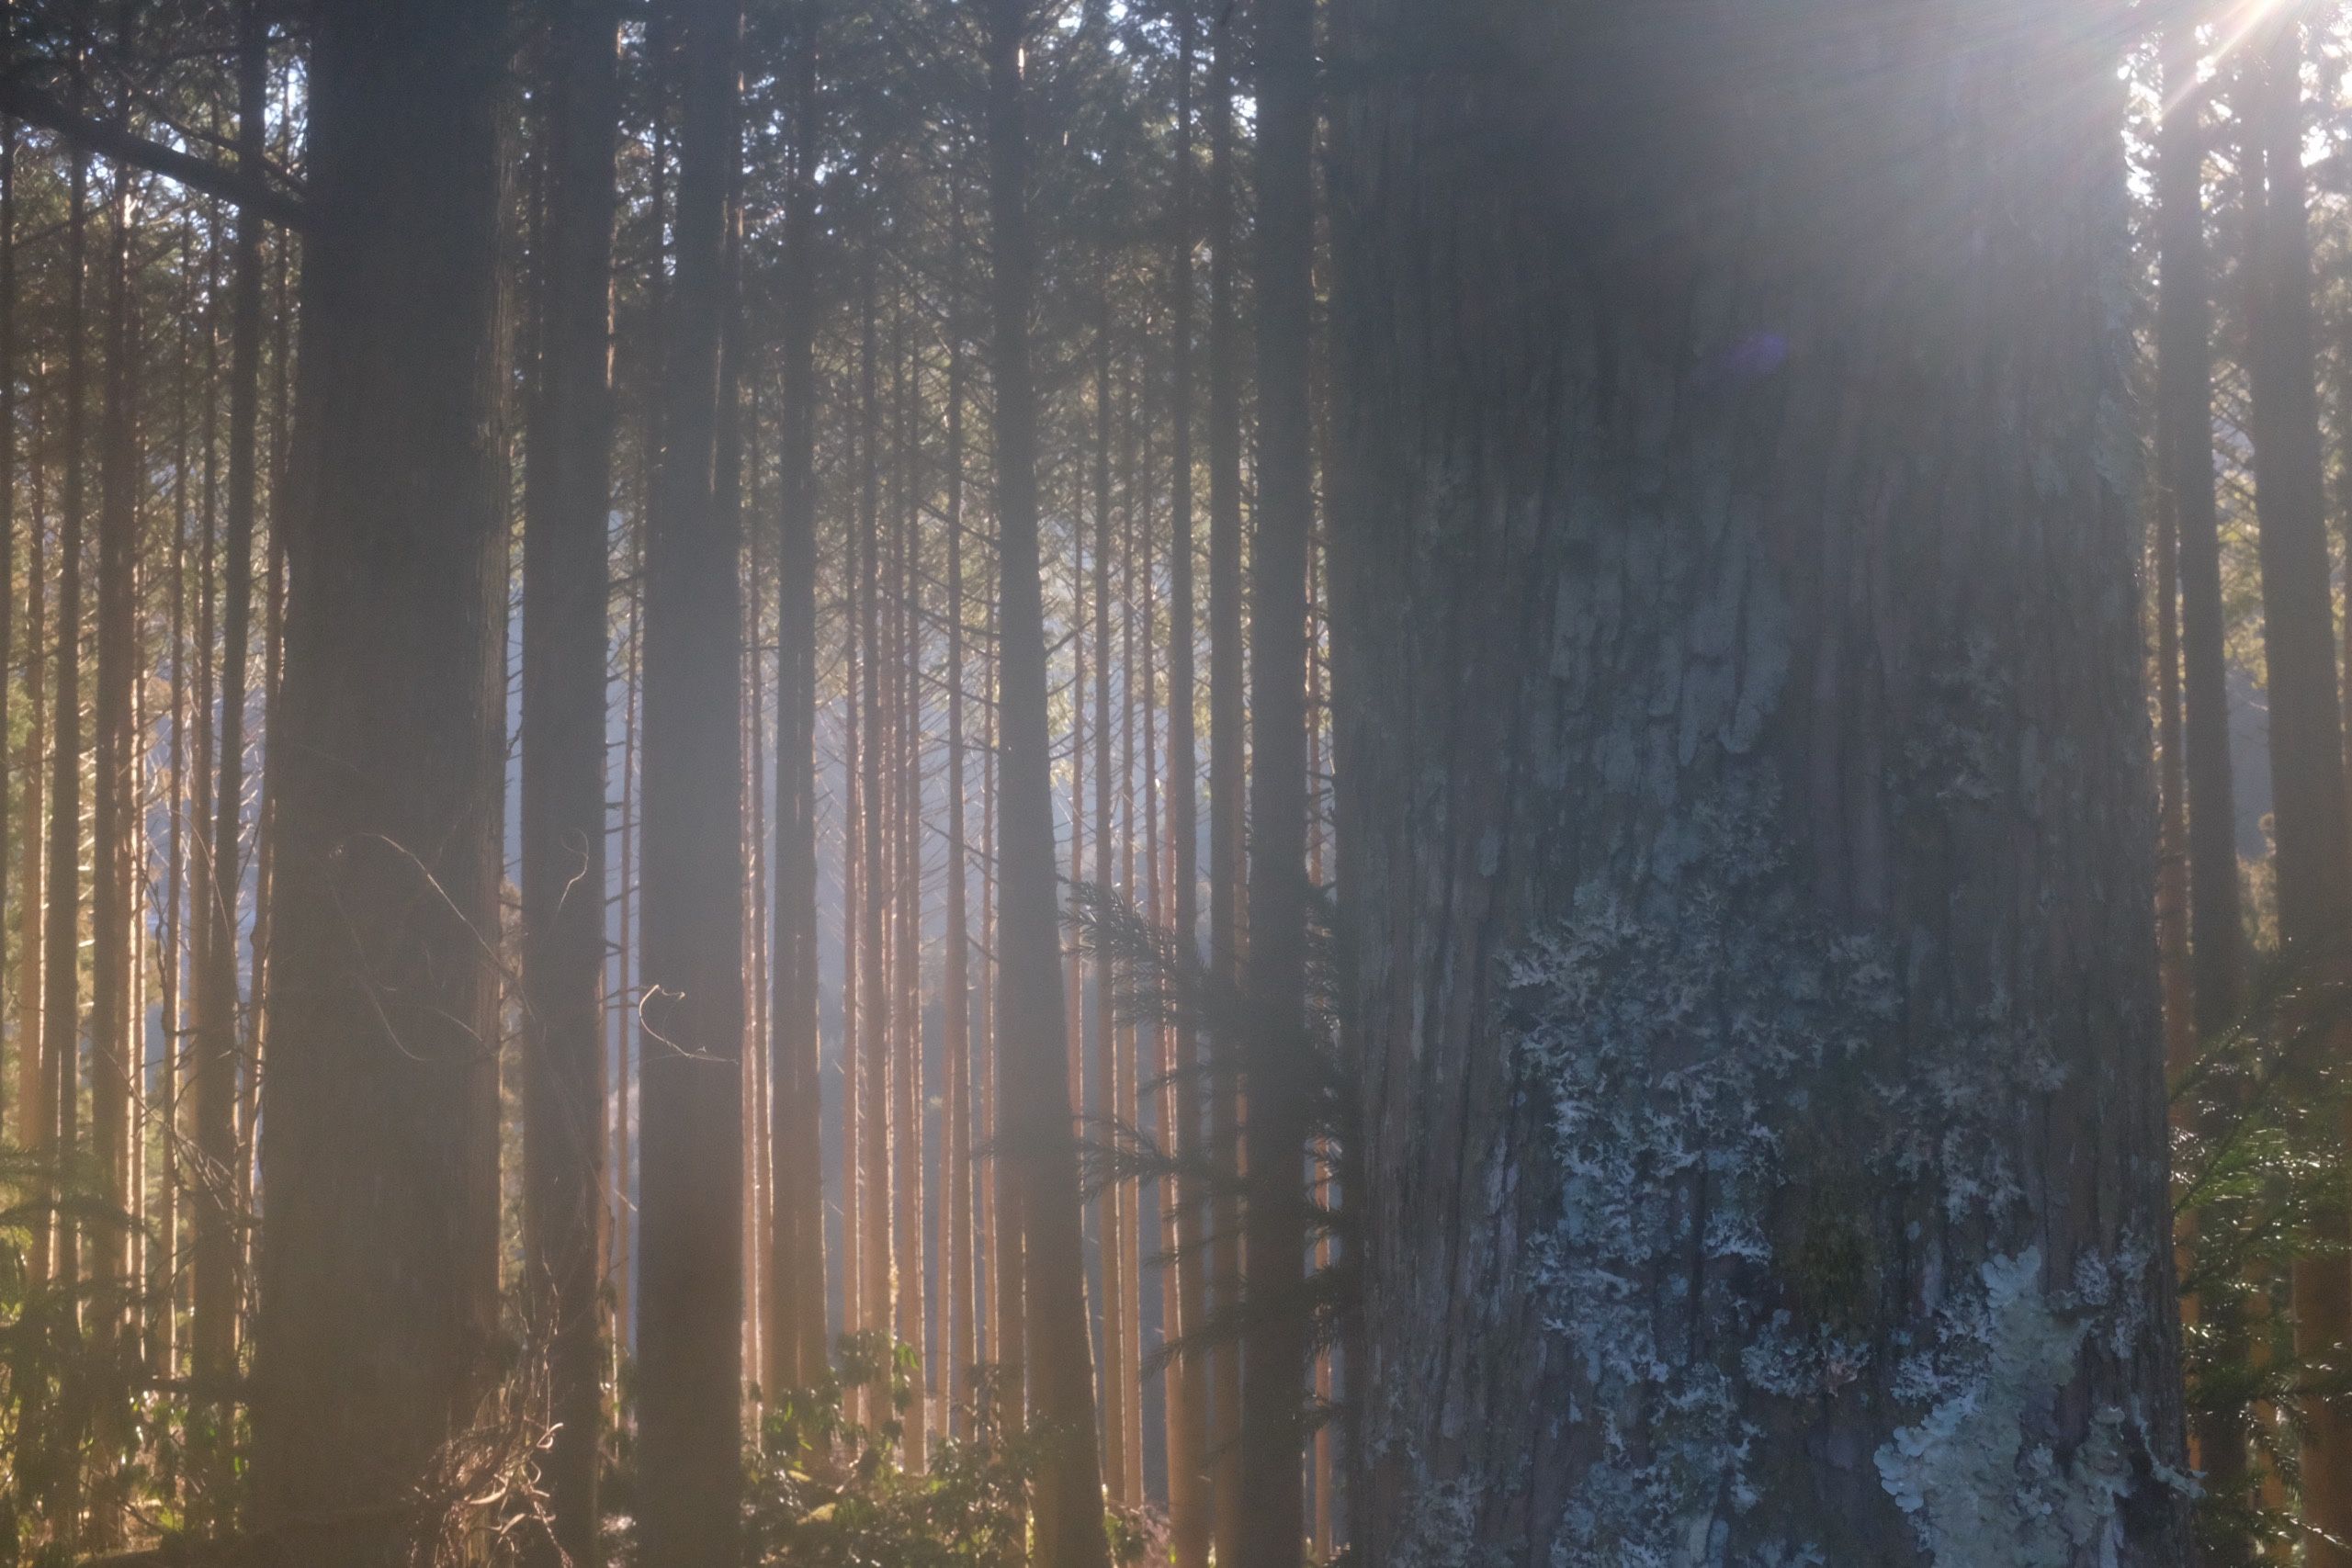 The morning light filters through a cedar forest.